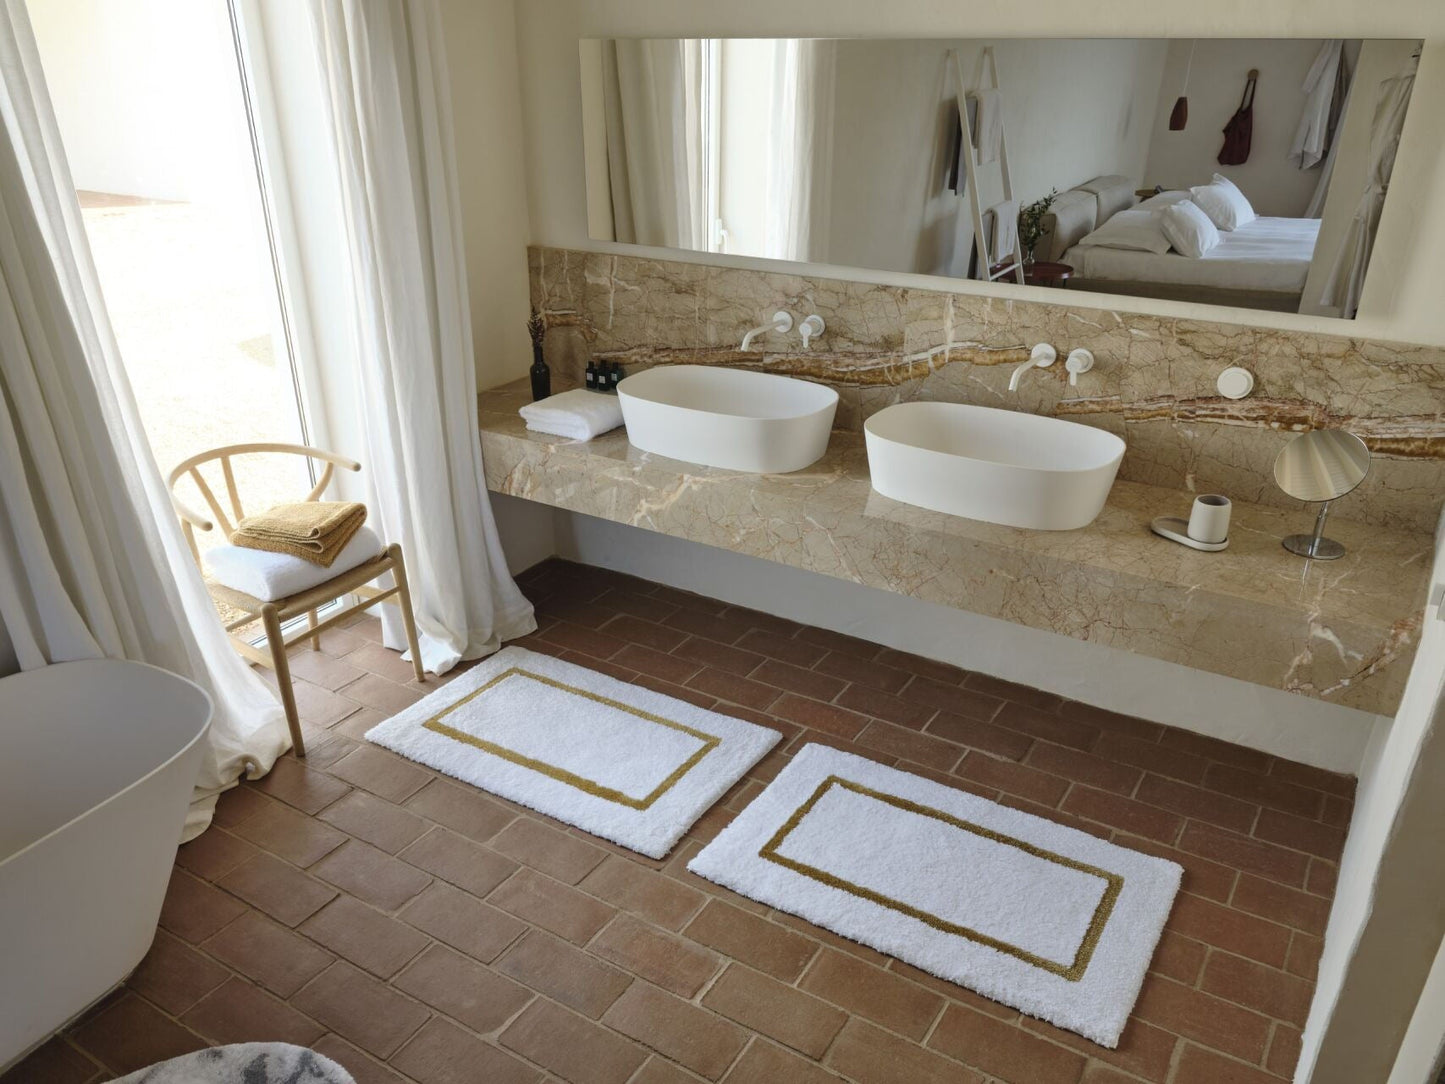 KARAT Luxury Black & White Egyptian Cotton Bathroom Rug - |VESIMI Design| Luxury Bathrooms and Home Decor